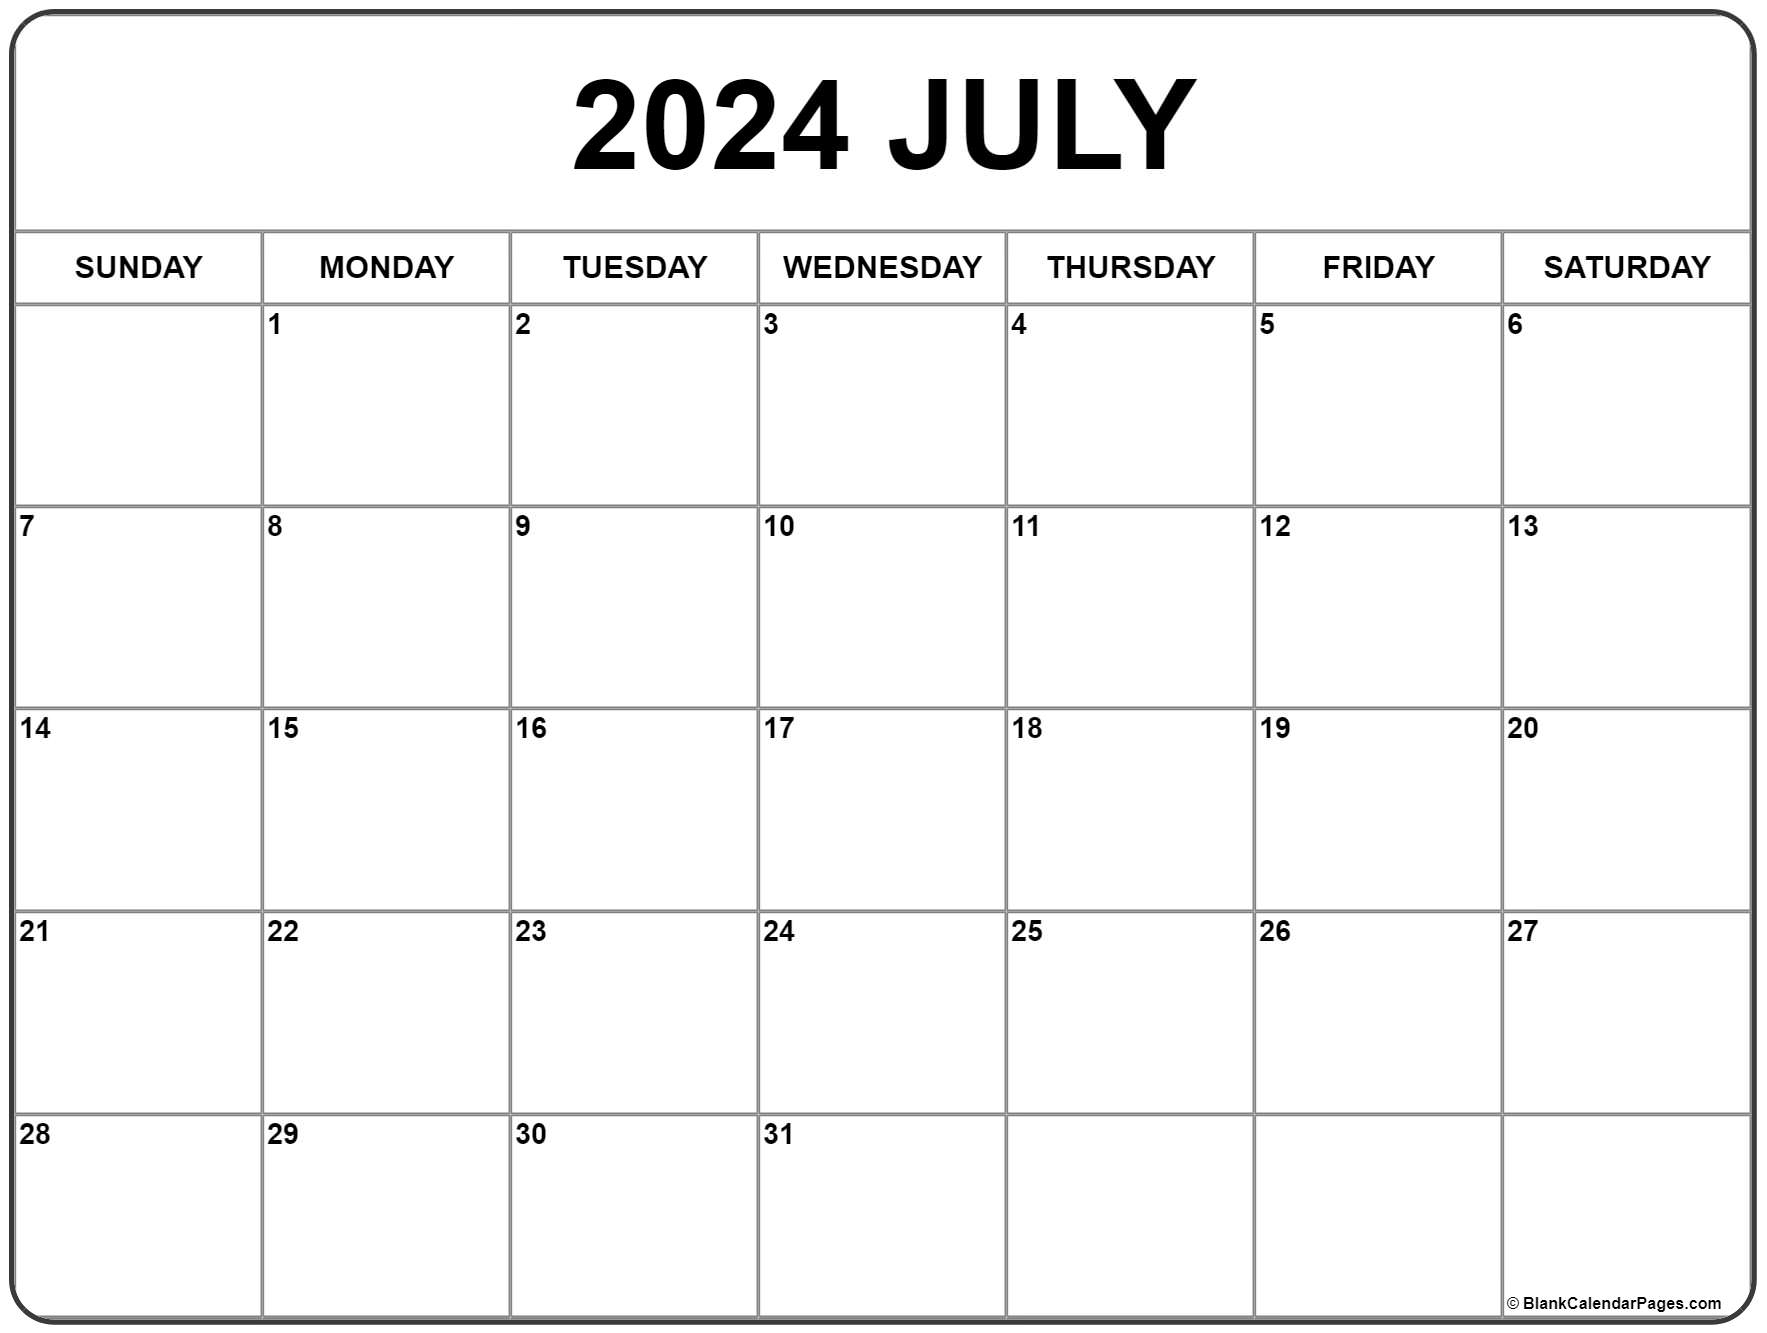 July 2021 calendar free printable calendar templates